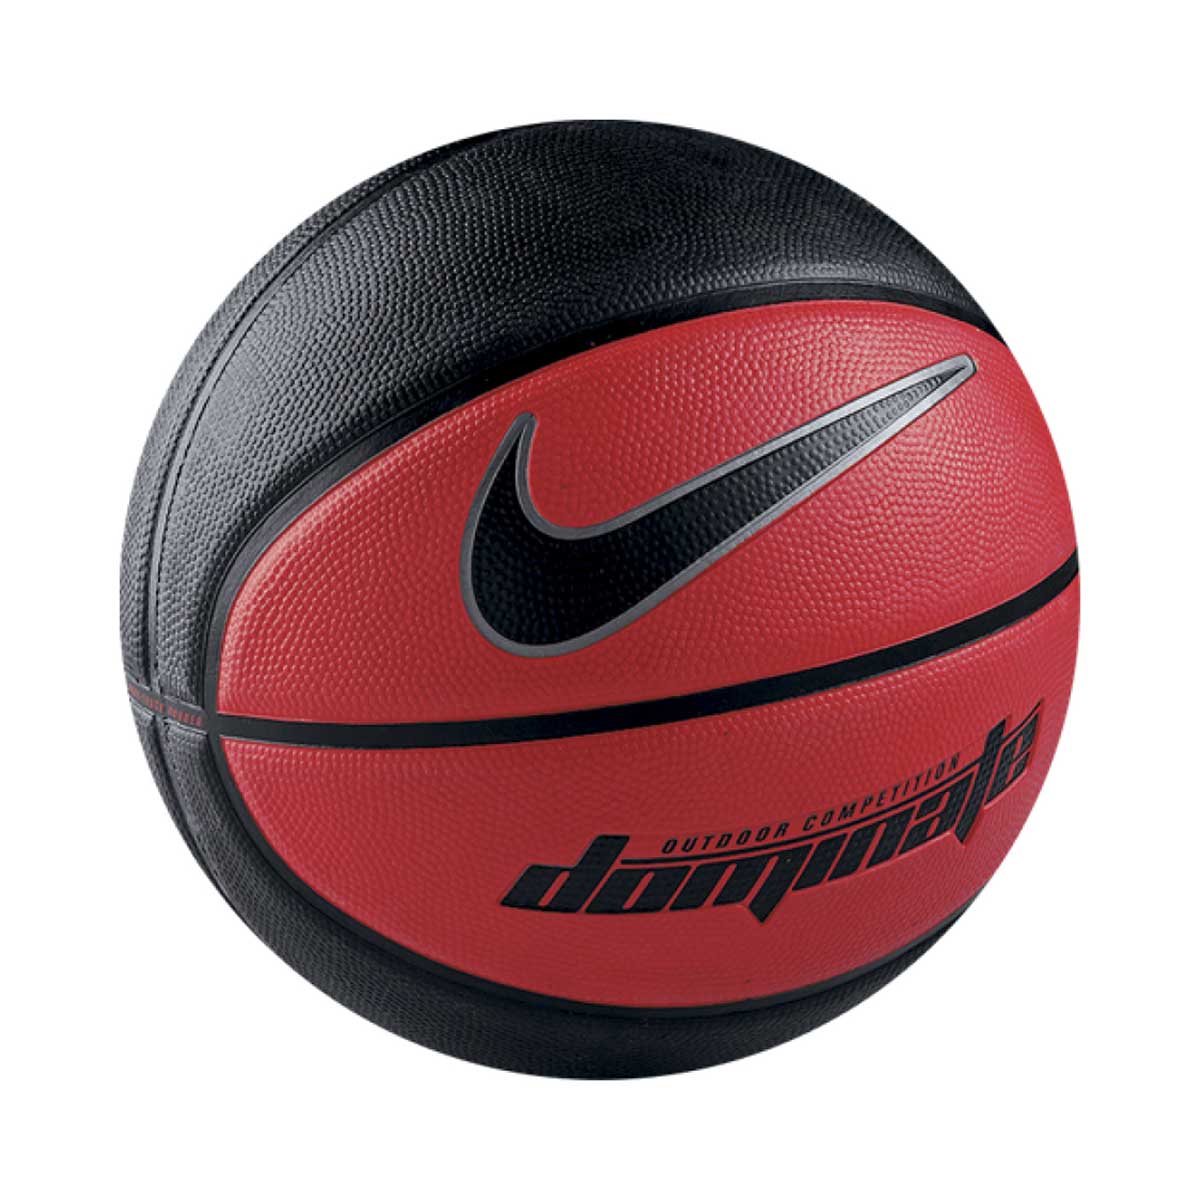 Buy Nike Dominate Basketball Online India- Nike Basketball Shop